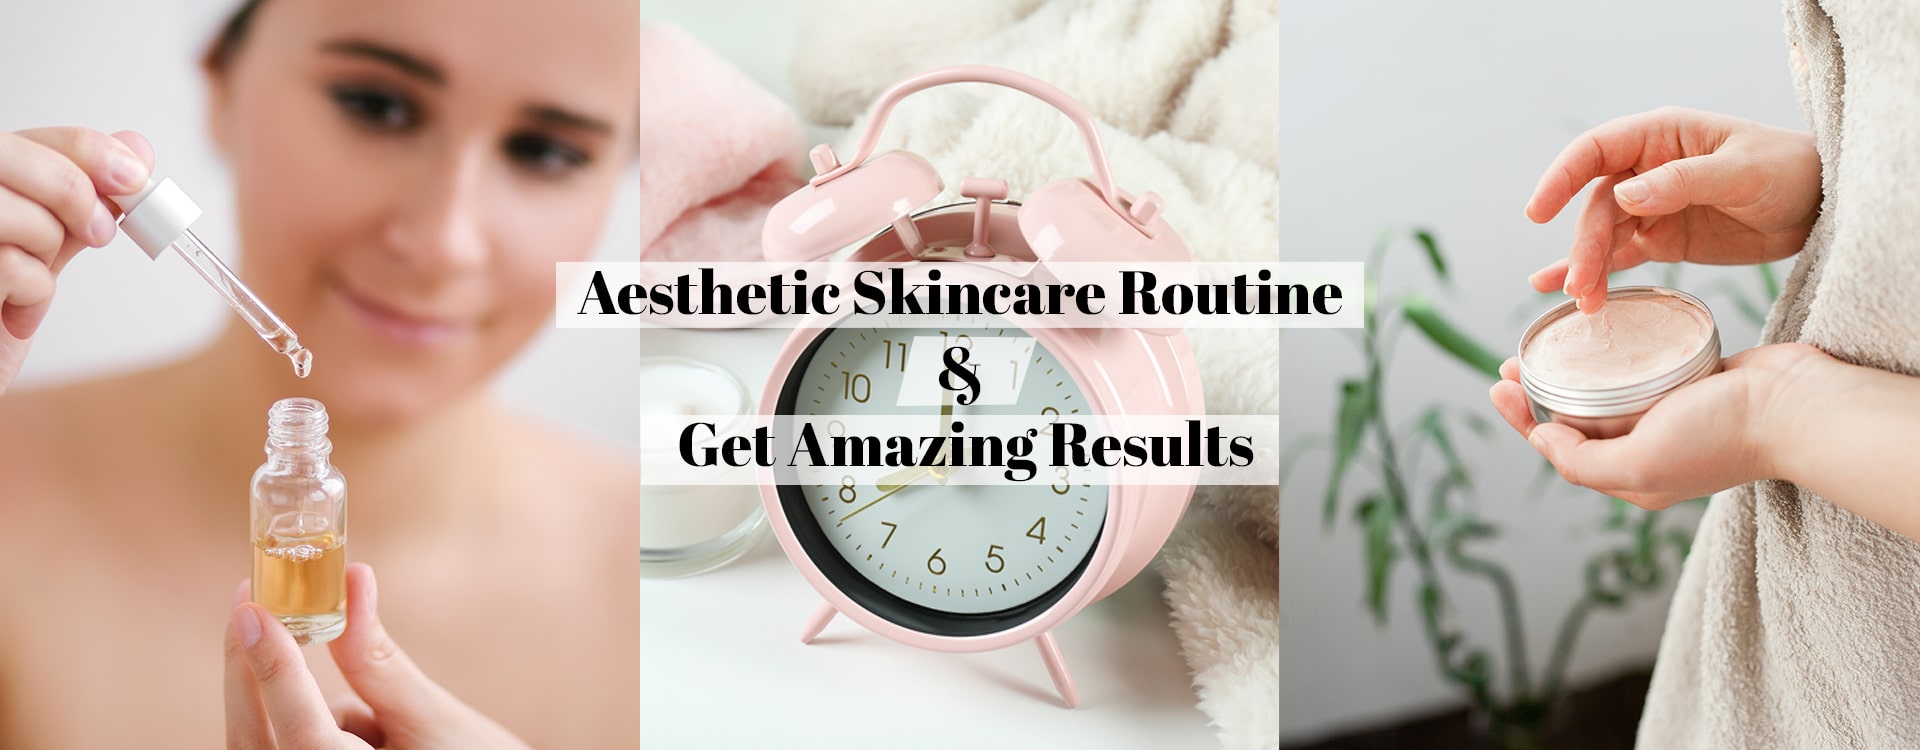 Aesthetic Skincare Routine